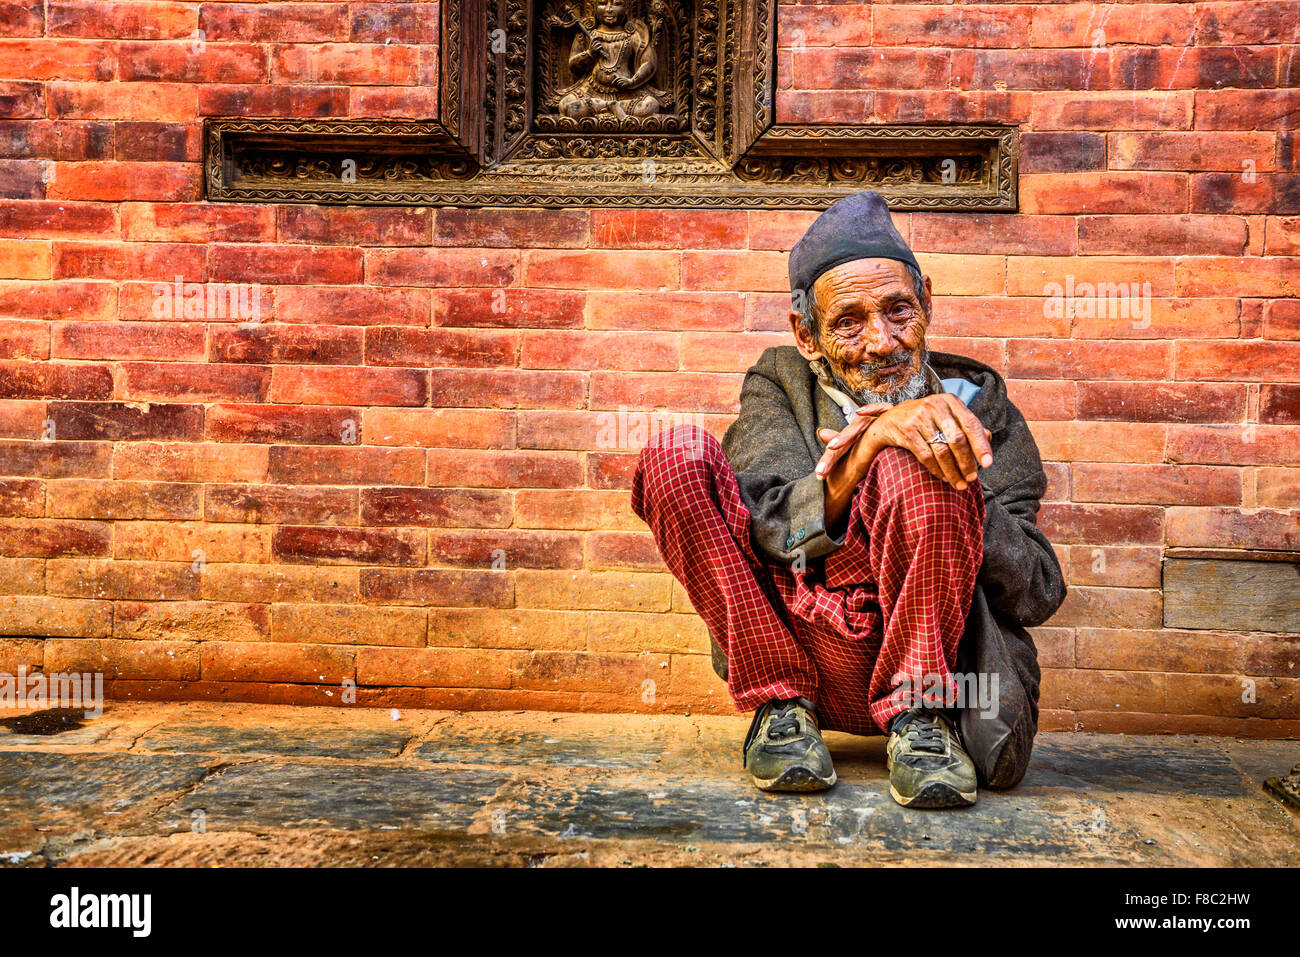 Old beggar in the street of Kathmandu Stock Photo